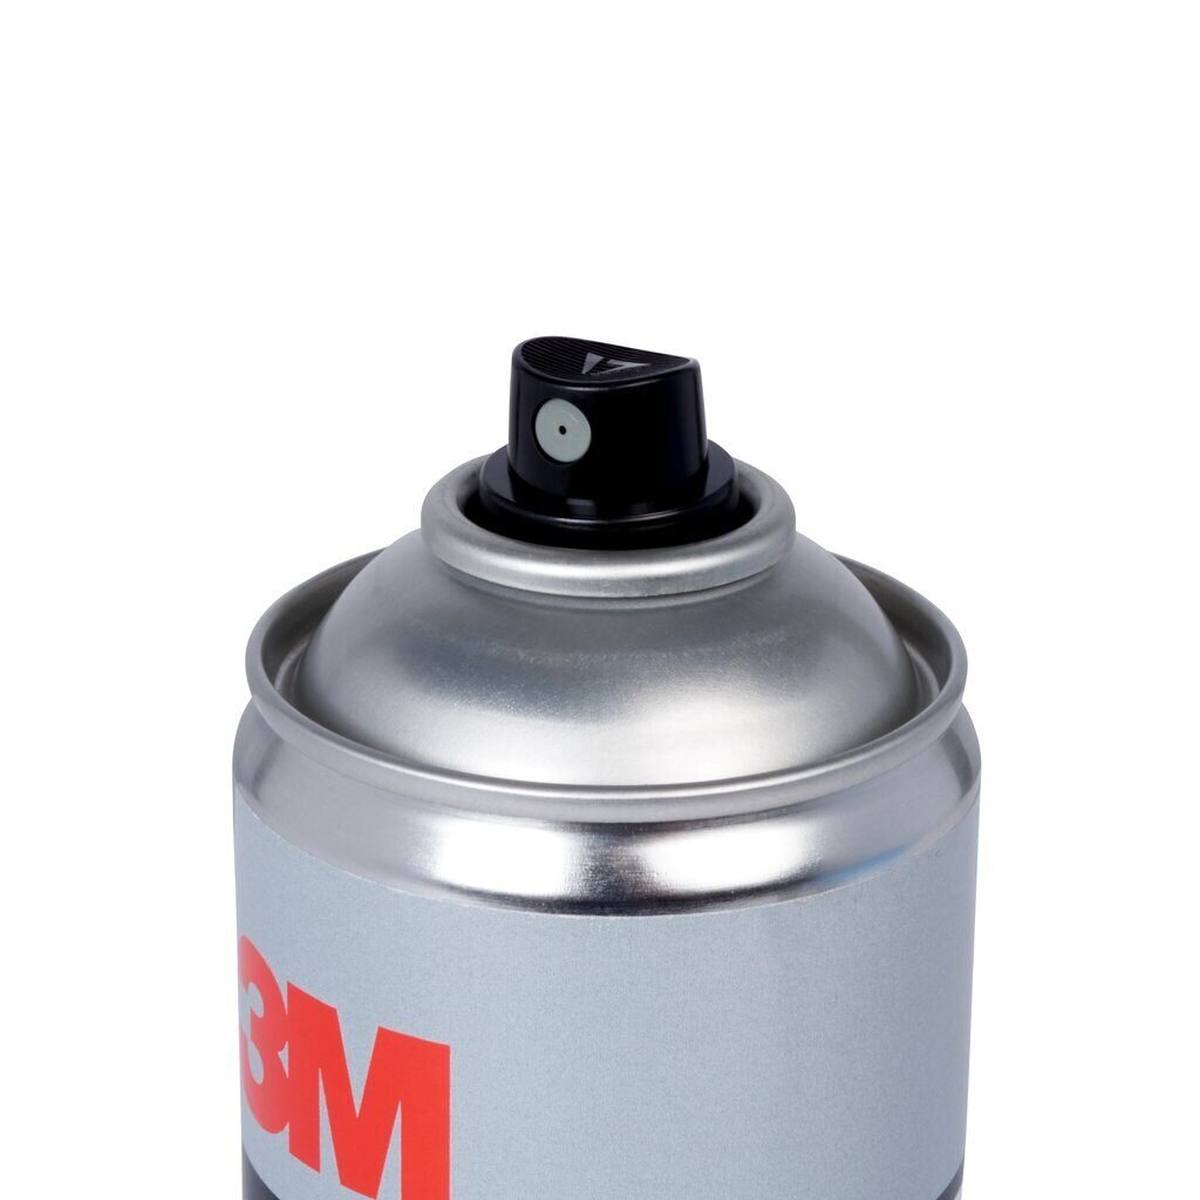 3M Spray protector antigravilla l con estructura plana, gris, 500 ml #08159